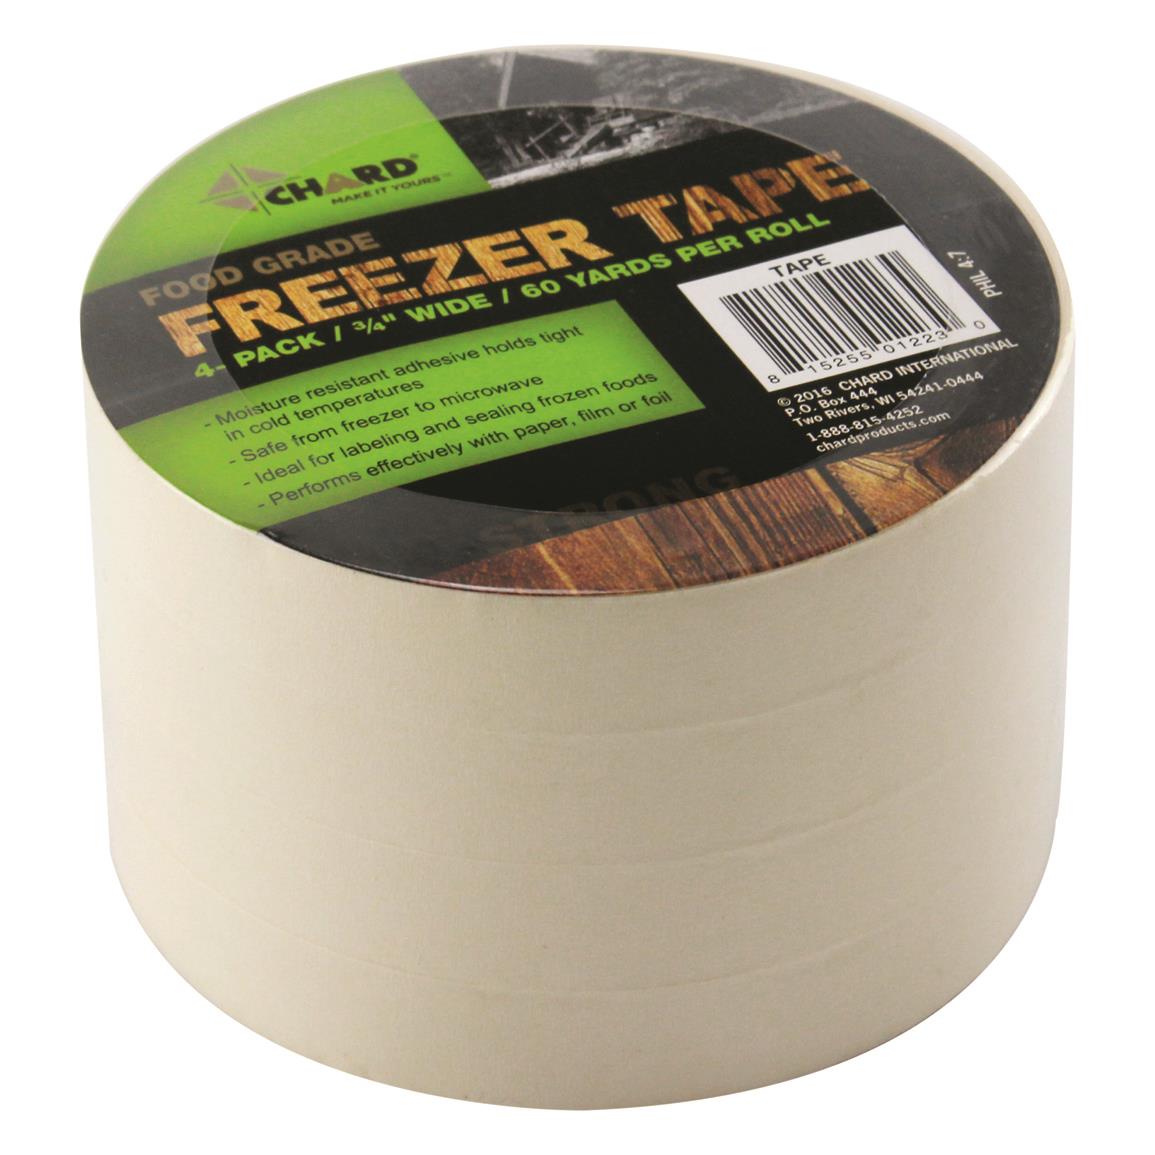 Chard Freezer Tape, 4 Pack